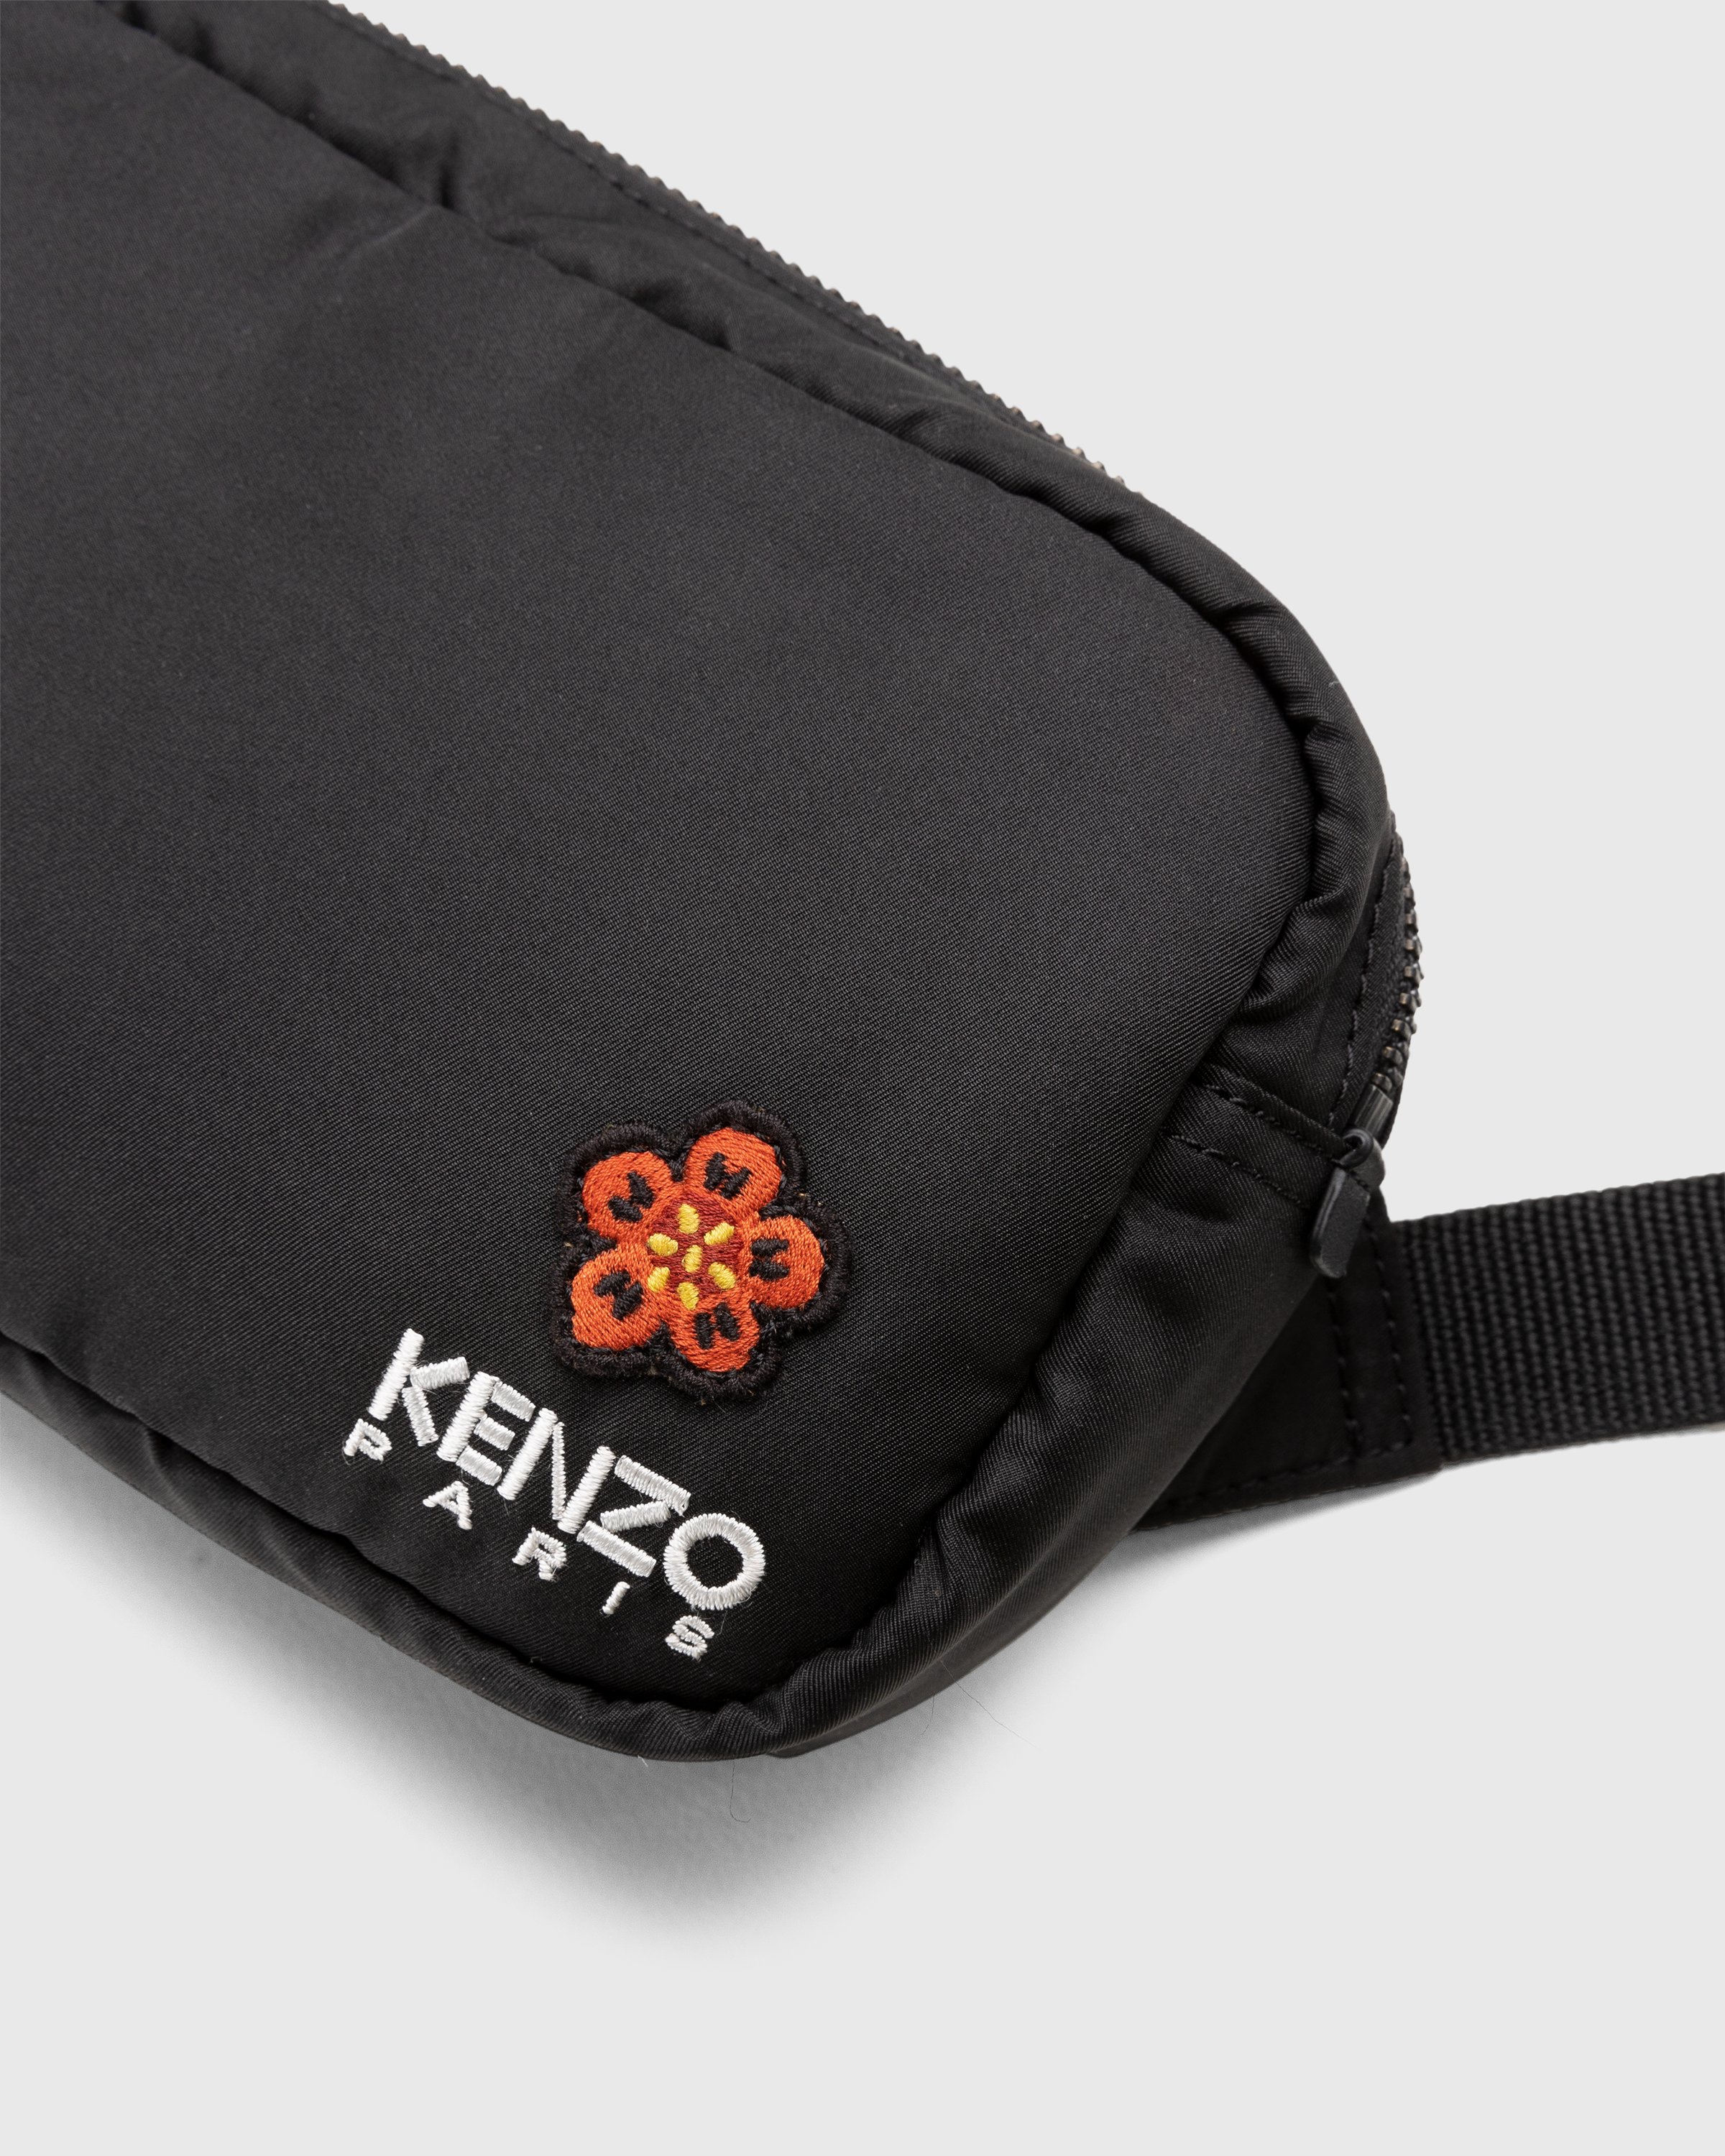 Kenzo - Crest Crossbody Bag Black - Accessories - Black - Image 5